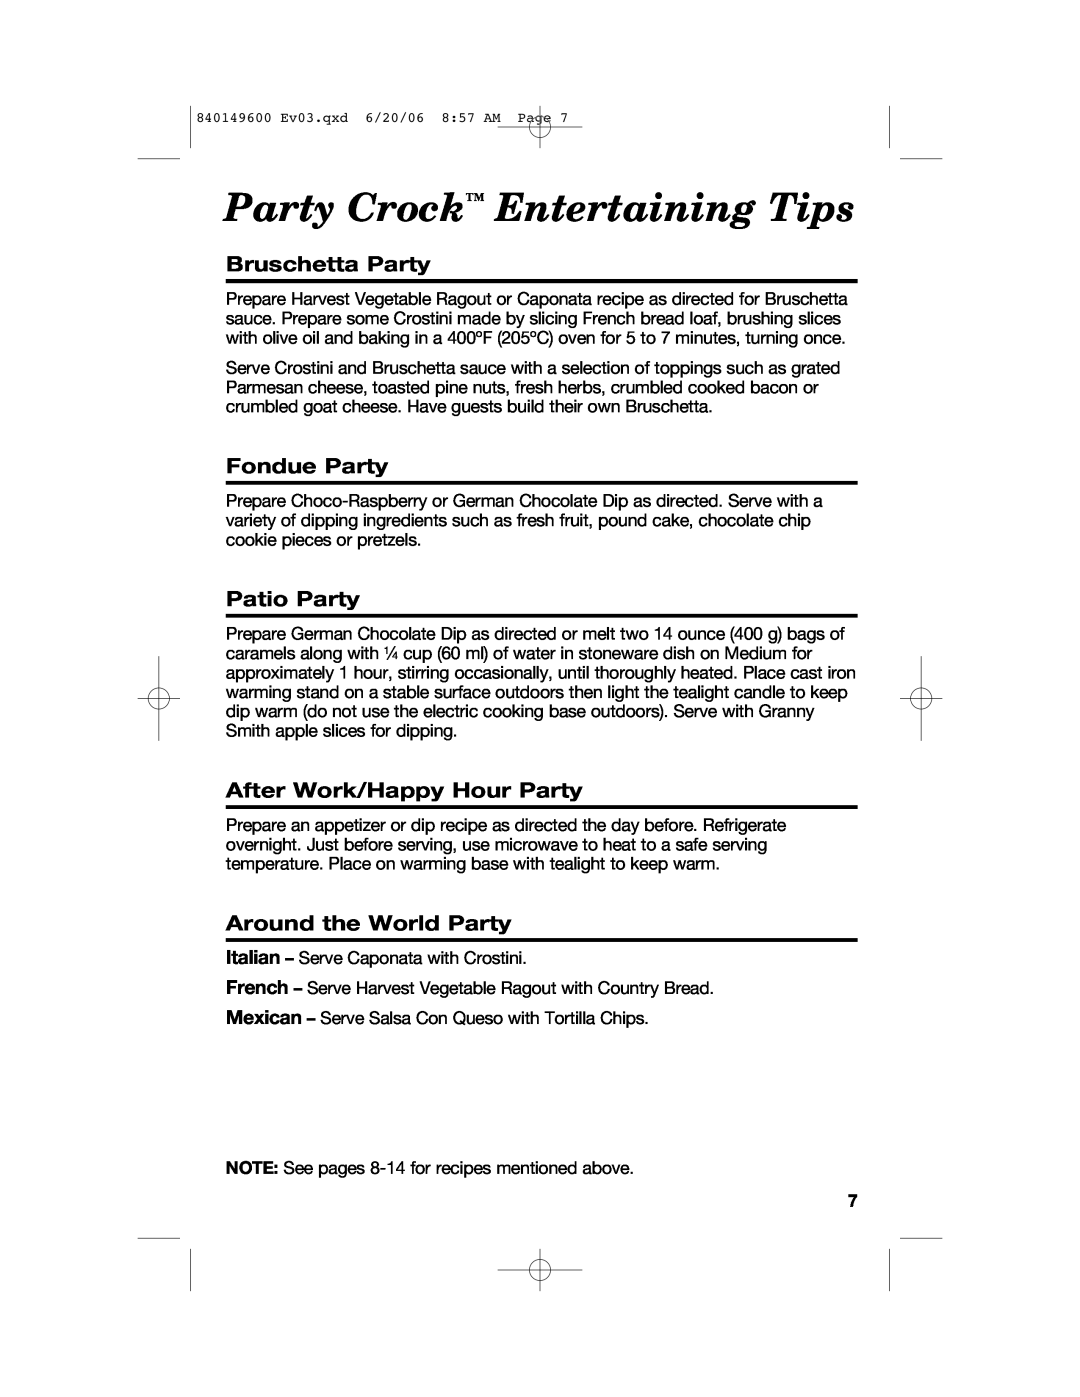 Hamilton Beach 840149600 manual Party Crock Entertaining Tips, Bruschetta Party, Fondue Party, Patio Party 